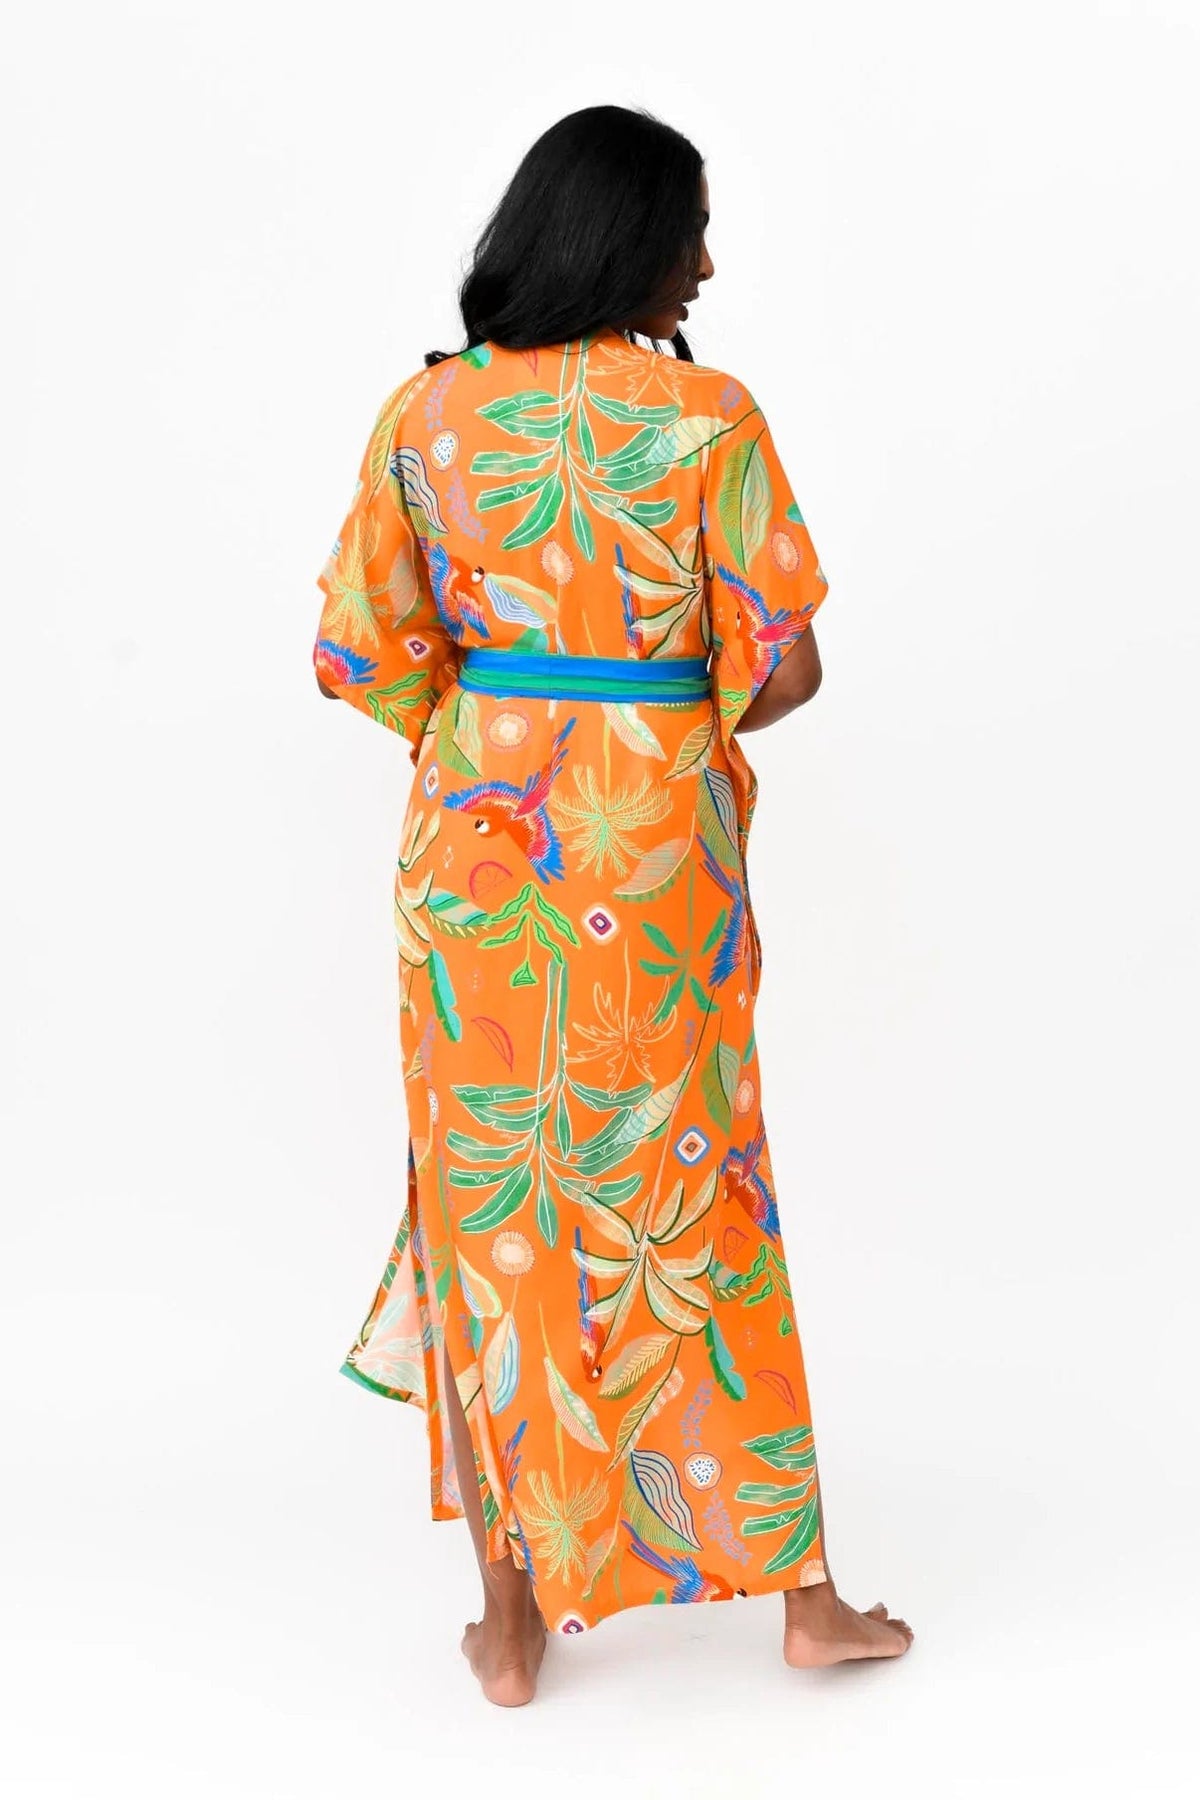 Zahlia Long Kimono in Tropical Print - Orange - Possi the Label - Splash Swimwear  - Dec22, kaftans & cover ups, kimonos, possi the label, Womens - Splash Swimwear 